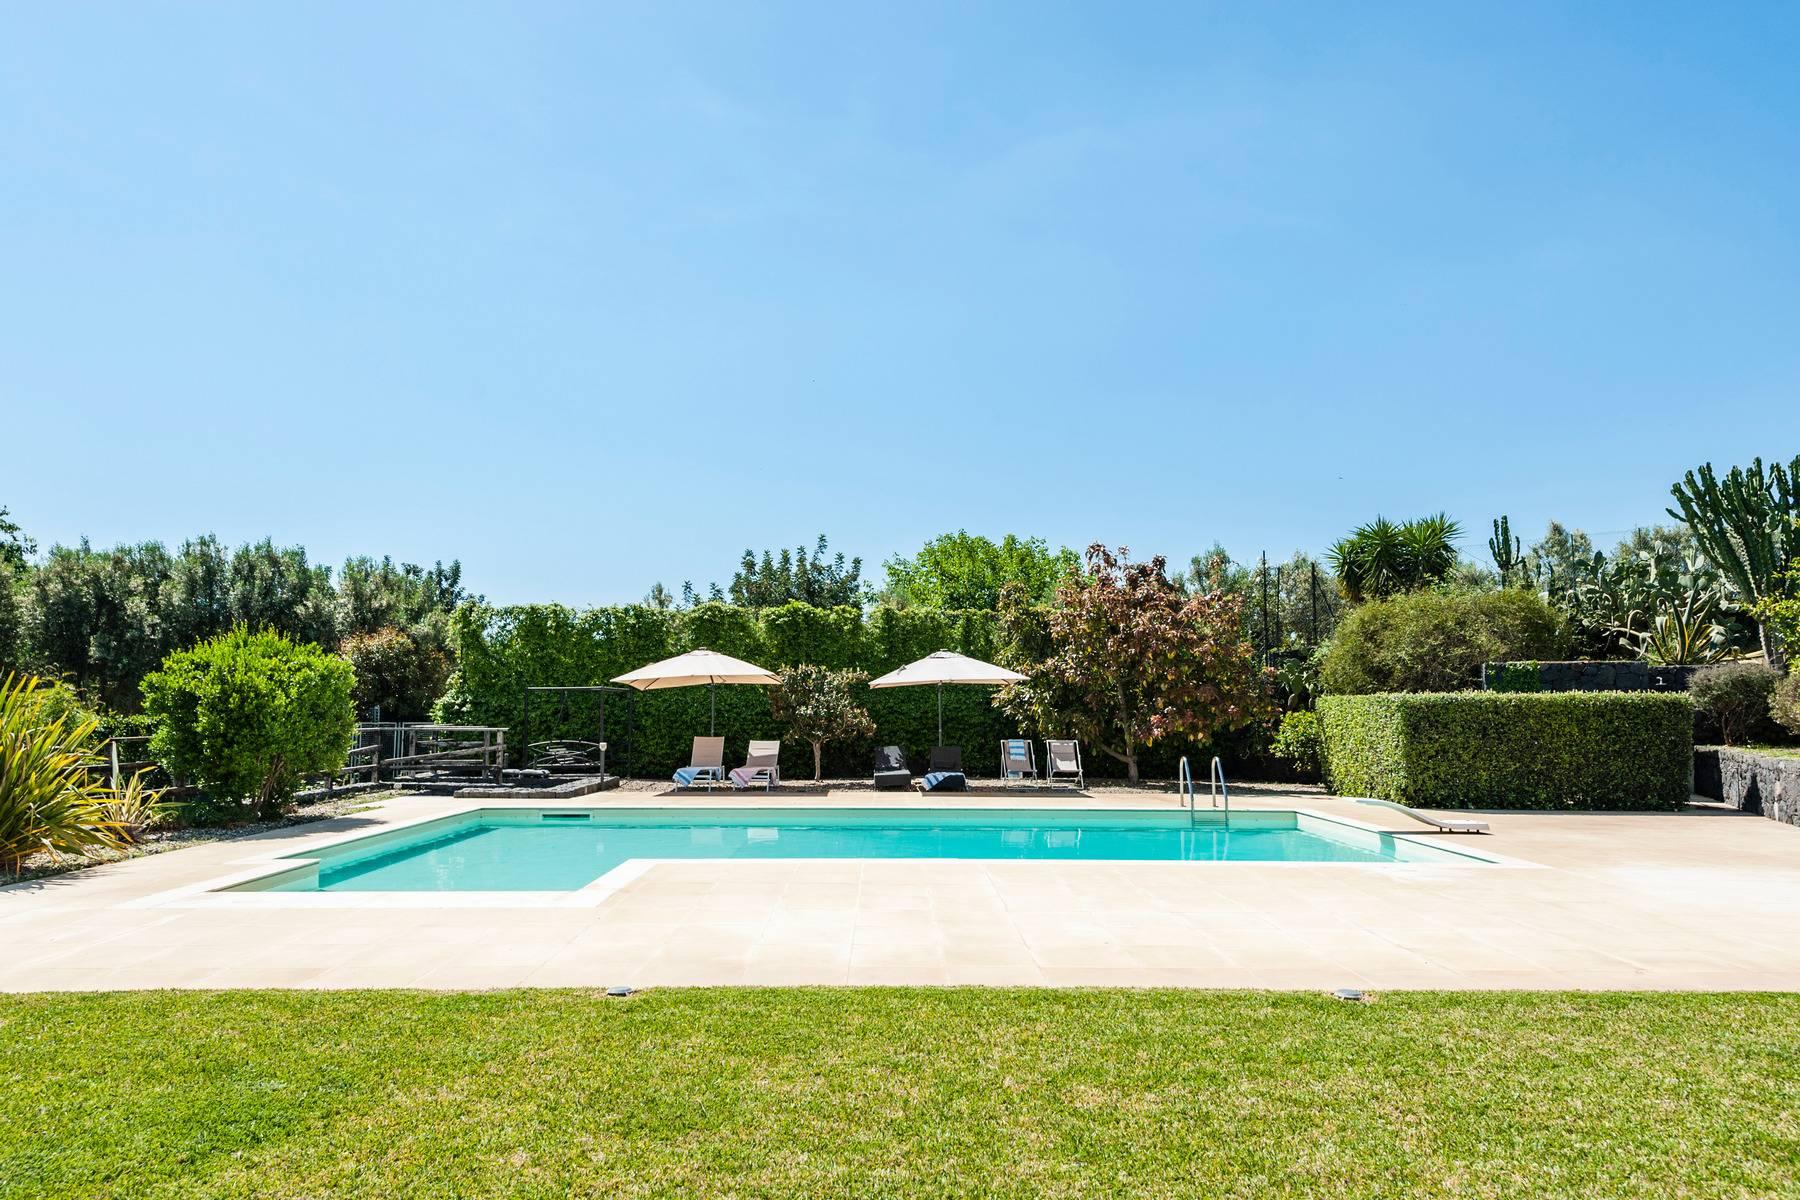 Villa esclusiva con piscina con vista ad Acireale - 5